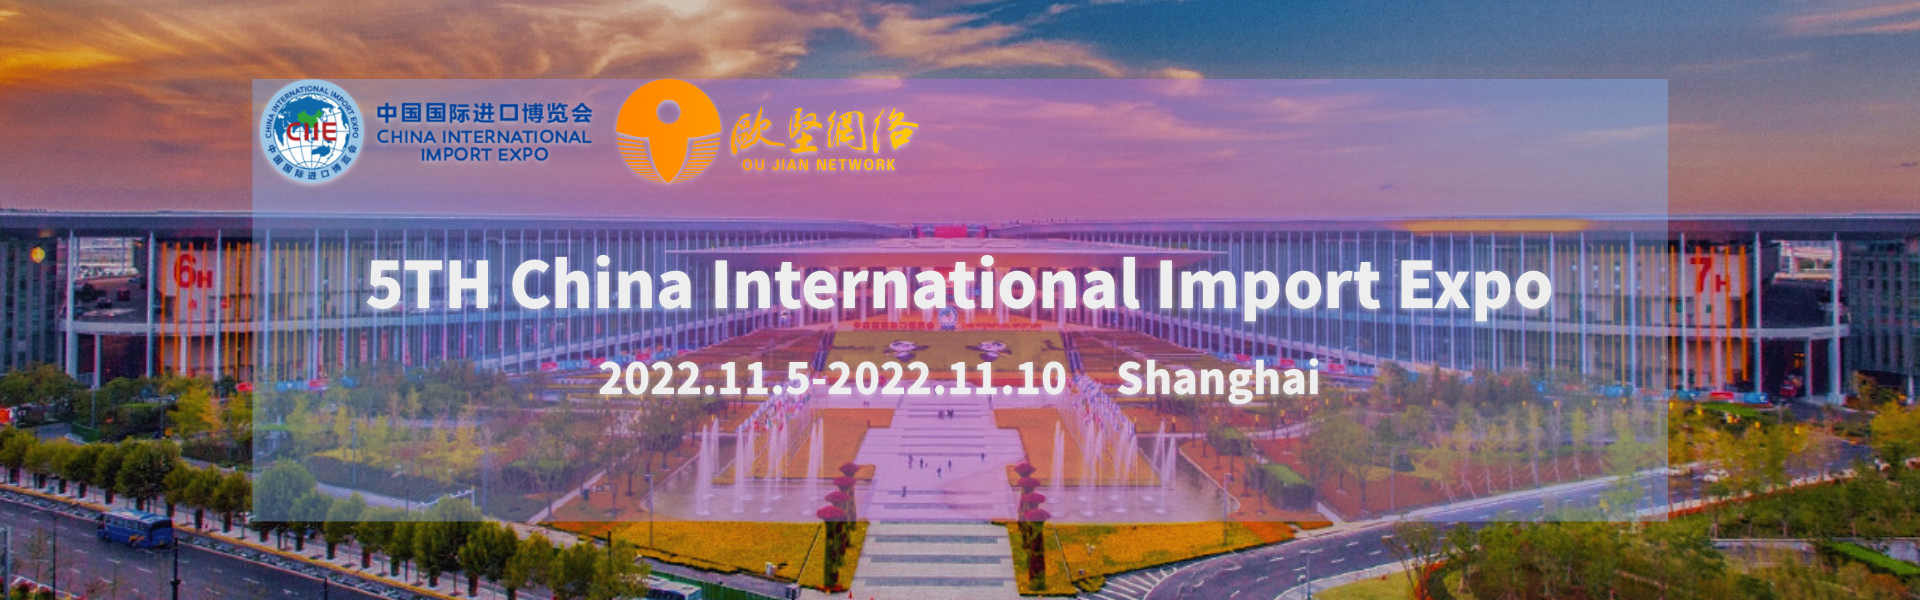 Sina Internationalis Import Expo